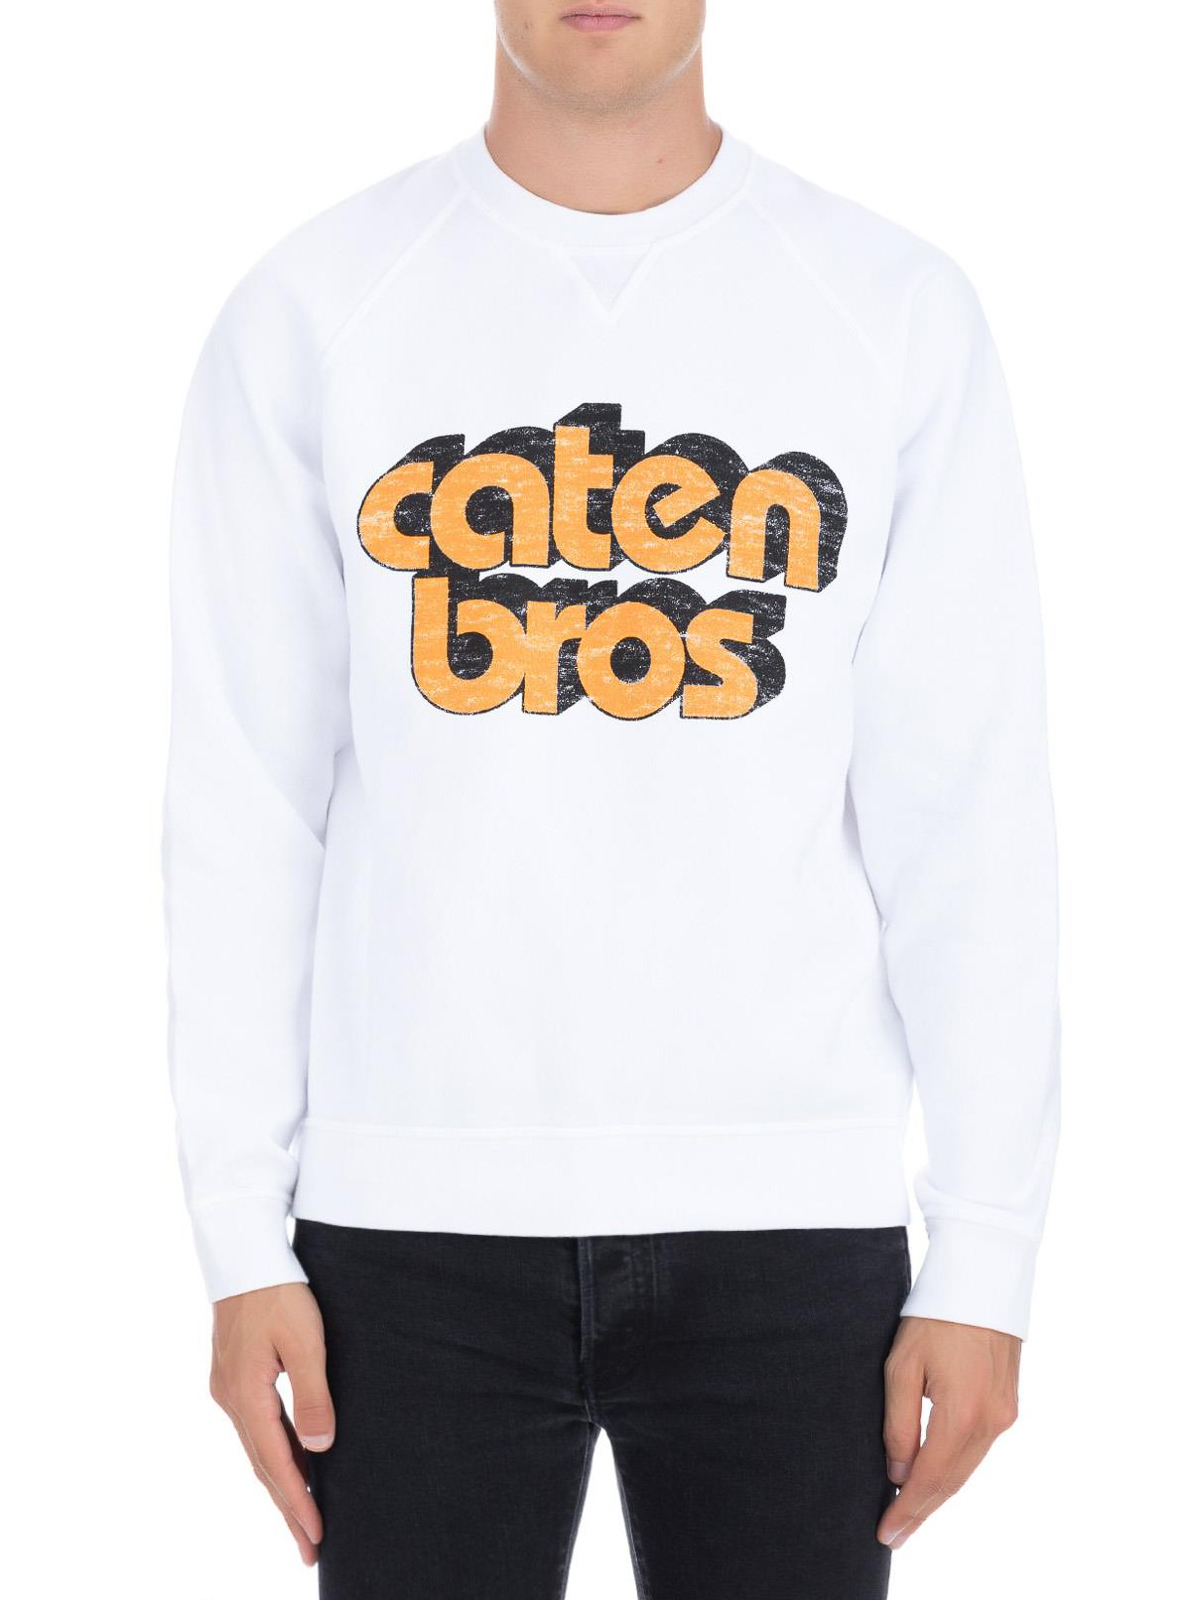 Dsquared2 - Caten Bros sweatshirt 